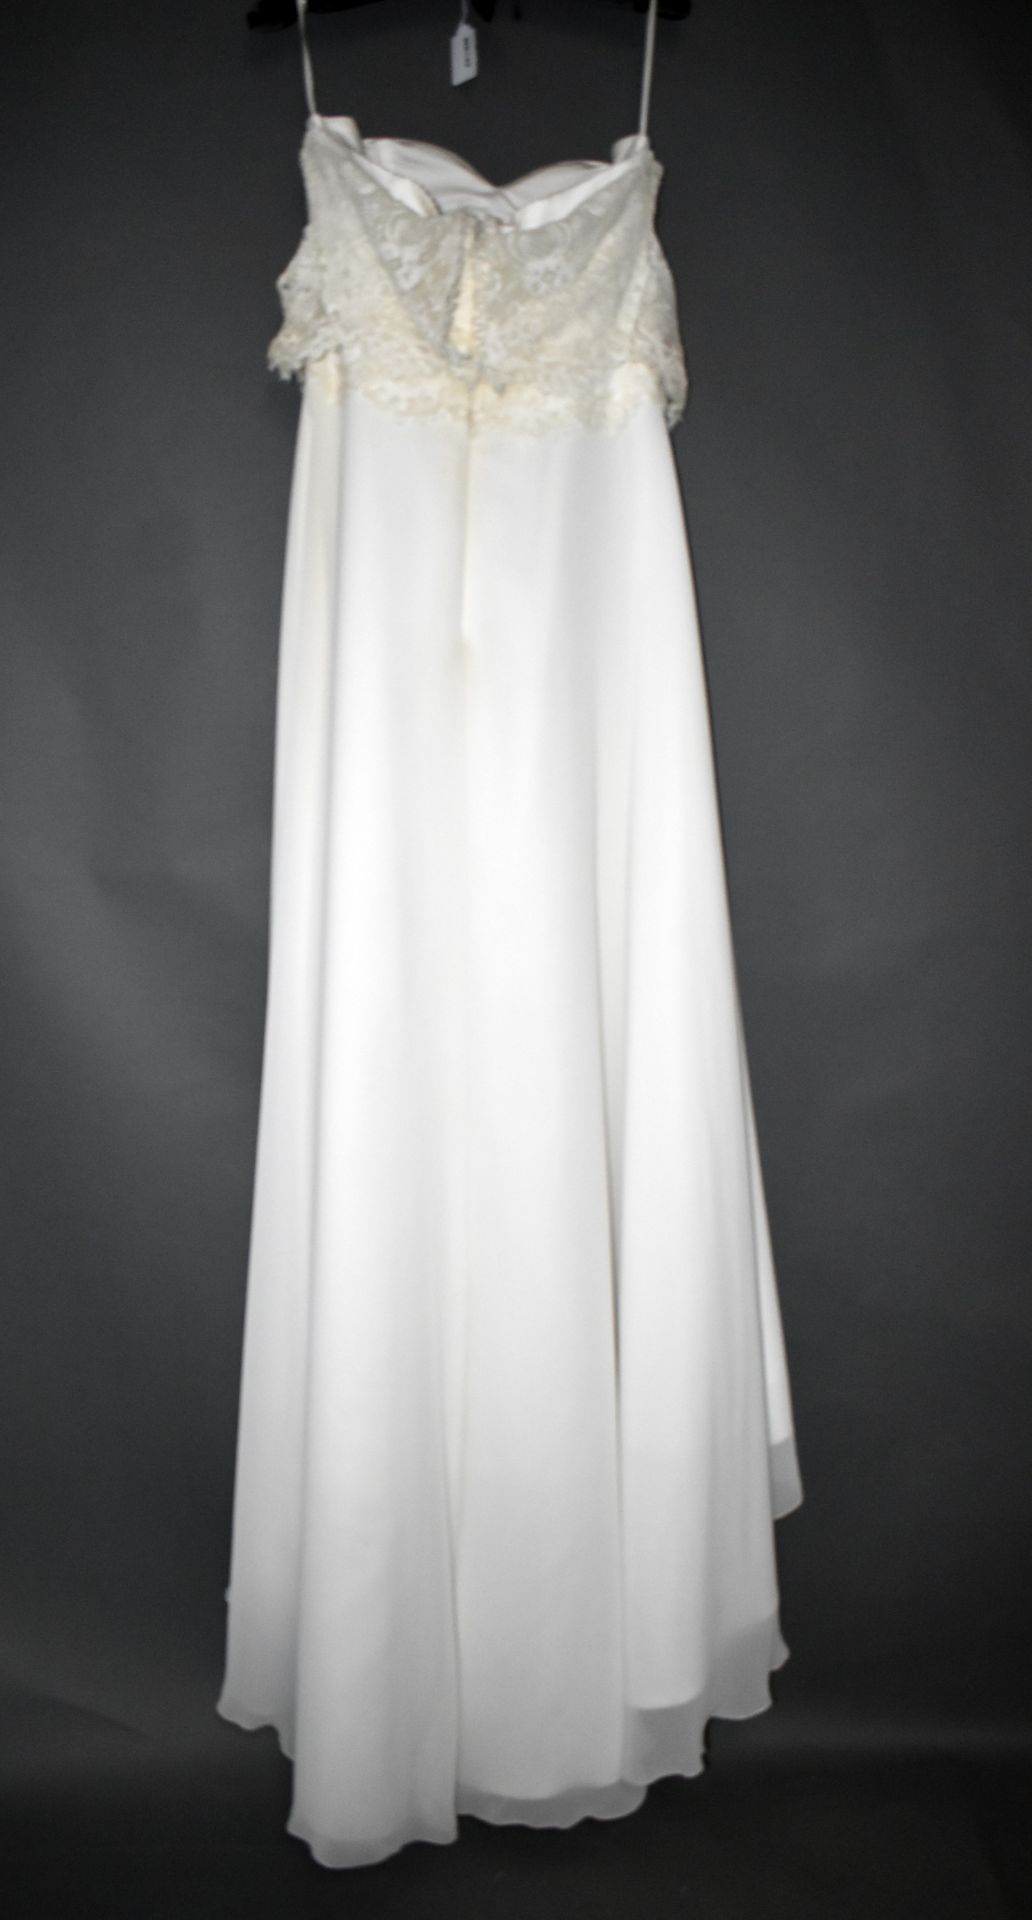 1 x LUSAN MANDONGUS Off The Shoulder Lace Bodice Designer Wedding Dress Bridal Gown RRP £1,450 UK 14 - Image 3 of 6